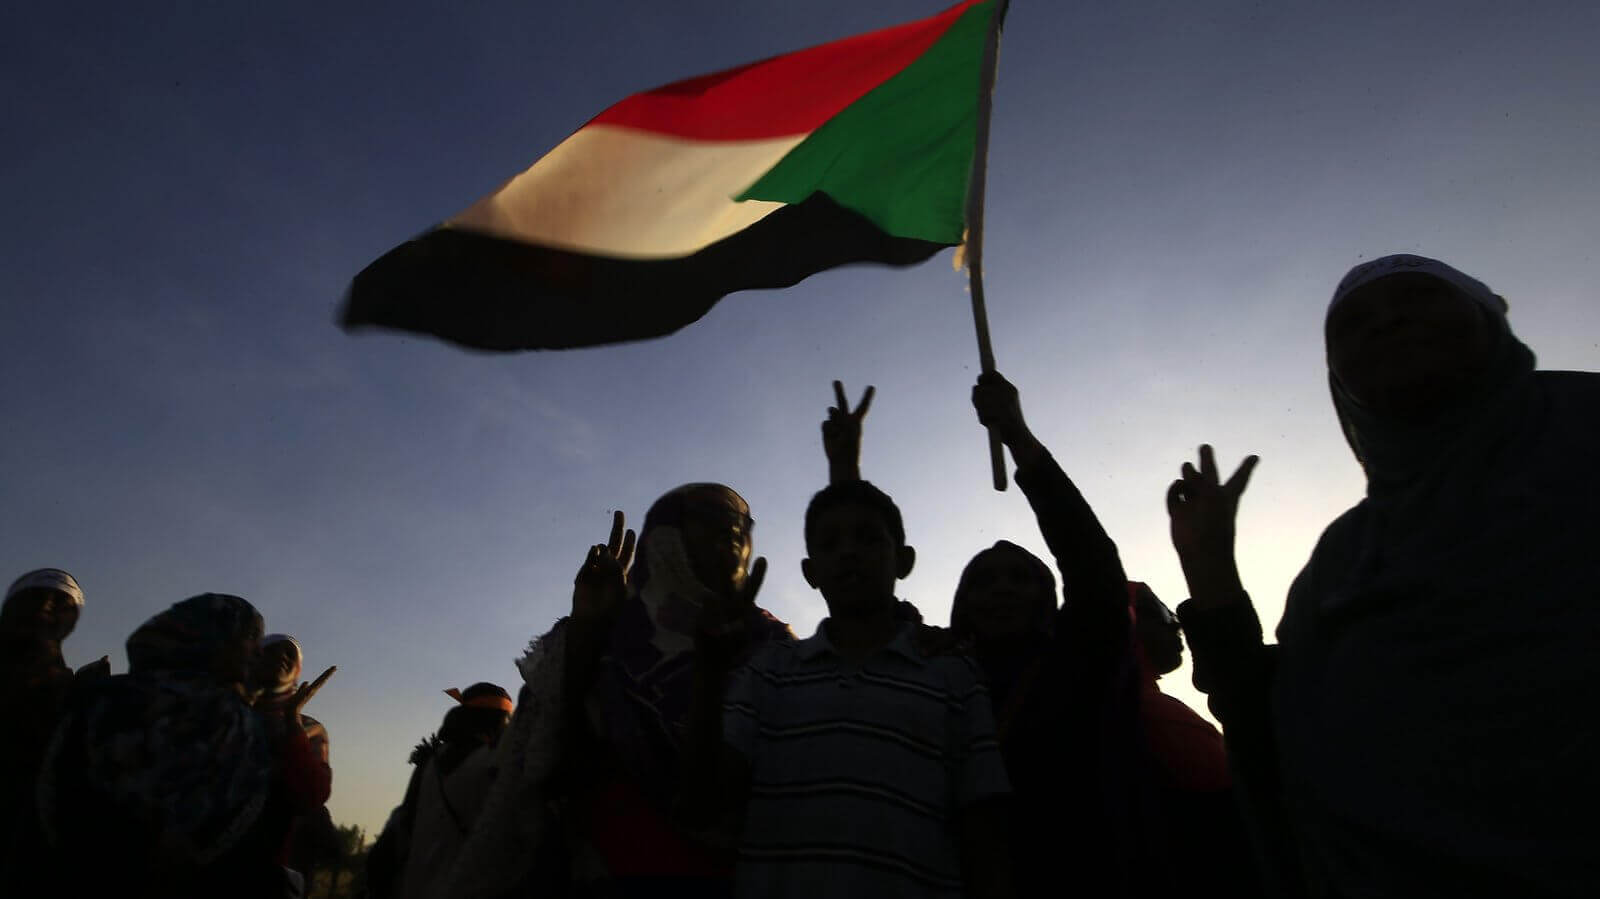 Sudan Criminalizes FGM, Public Flogging, and Apostasy Laws in Sweeping Legal Reforms